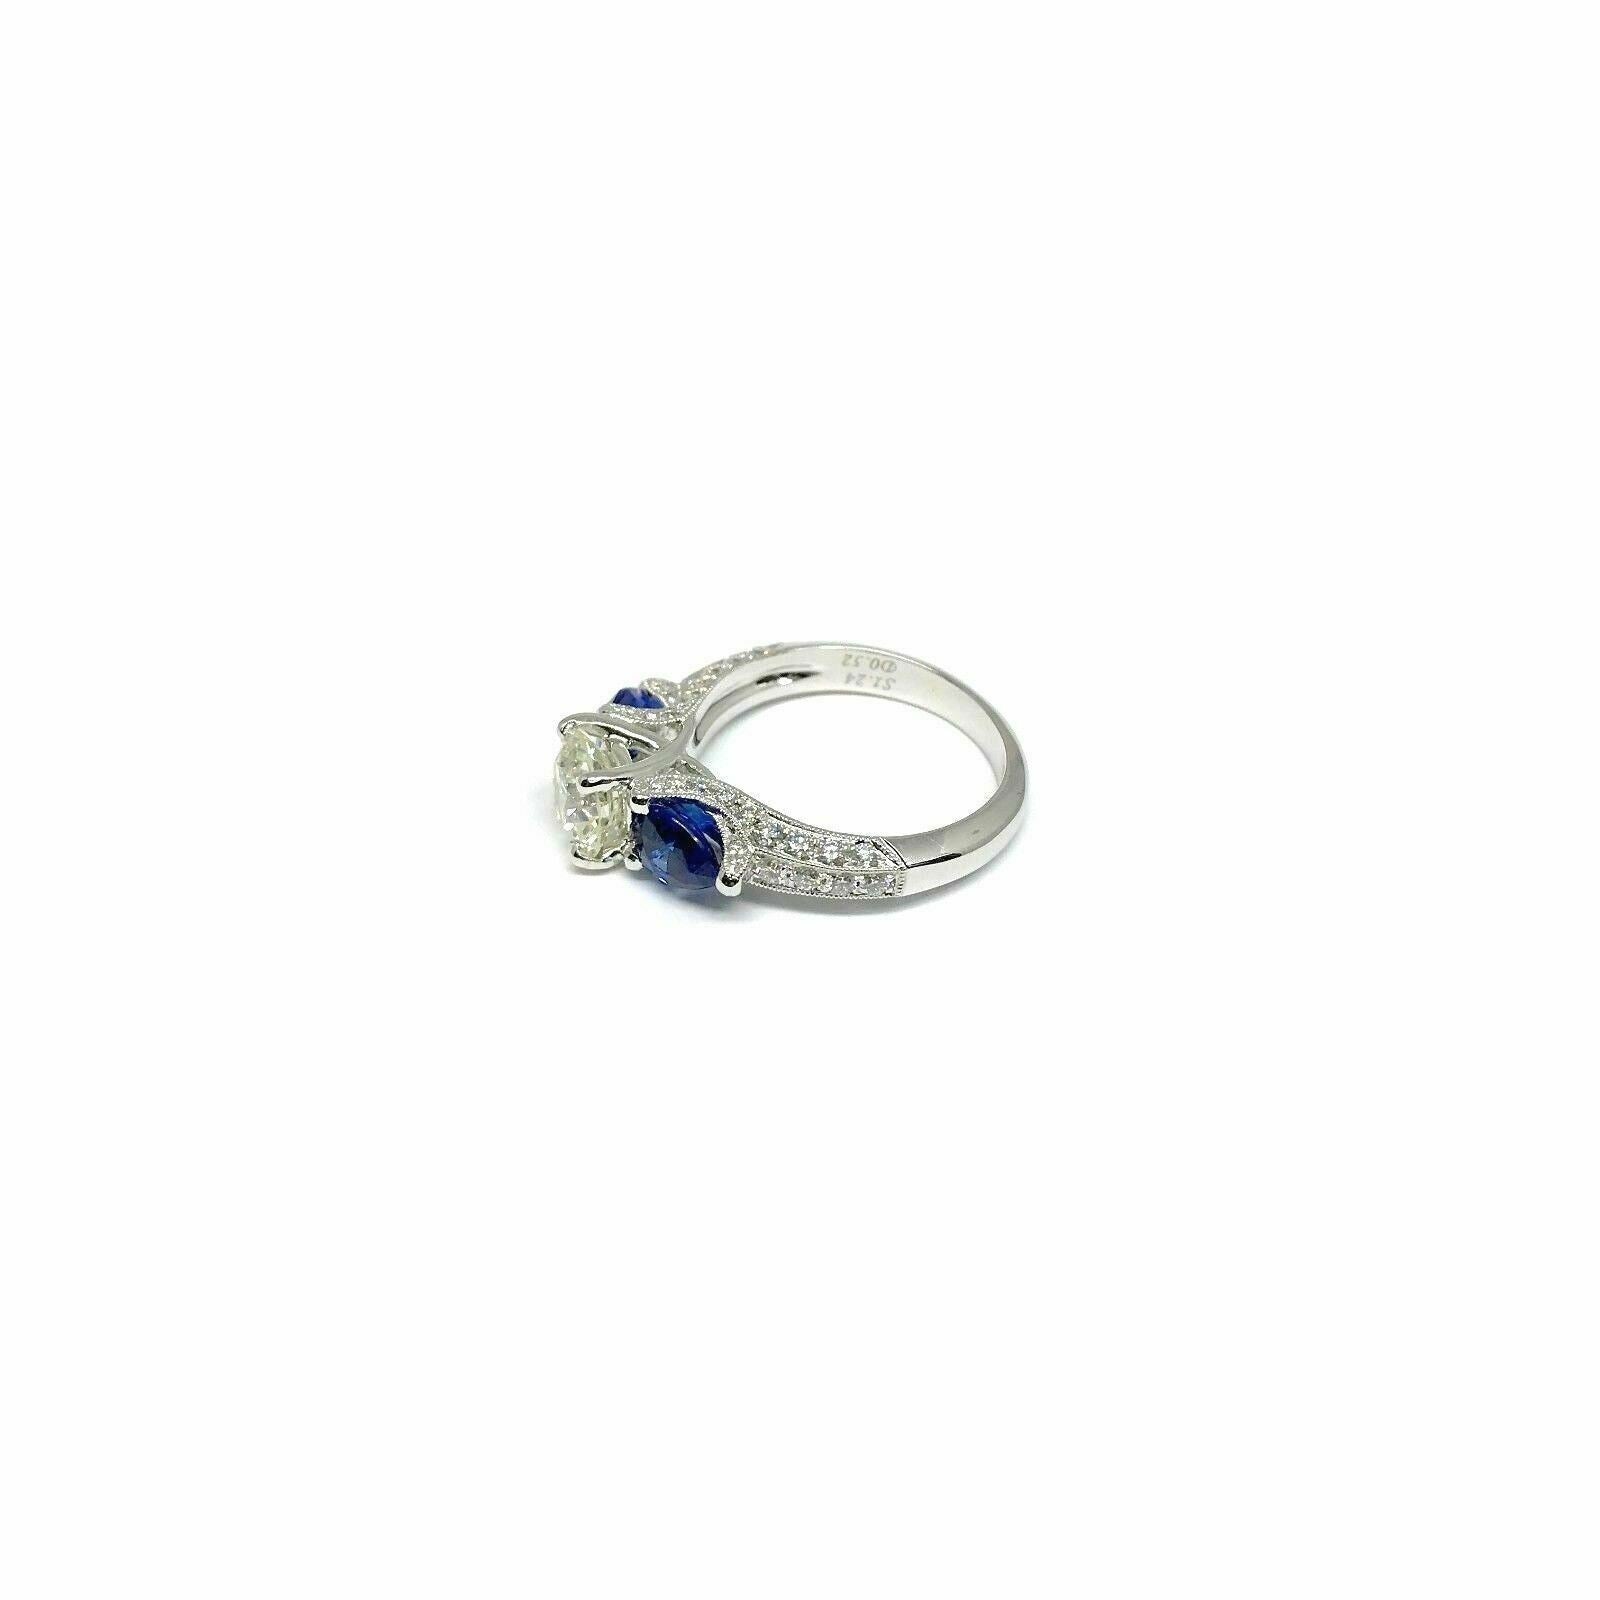 18K White Gold Ring w/EGL Certified 1.29ct RBC Diamond & 2 Pear Shape Blue Sapp